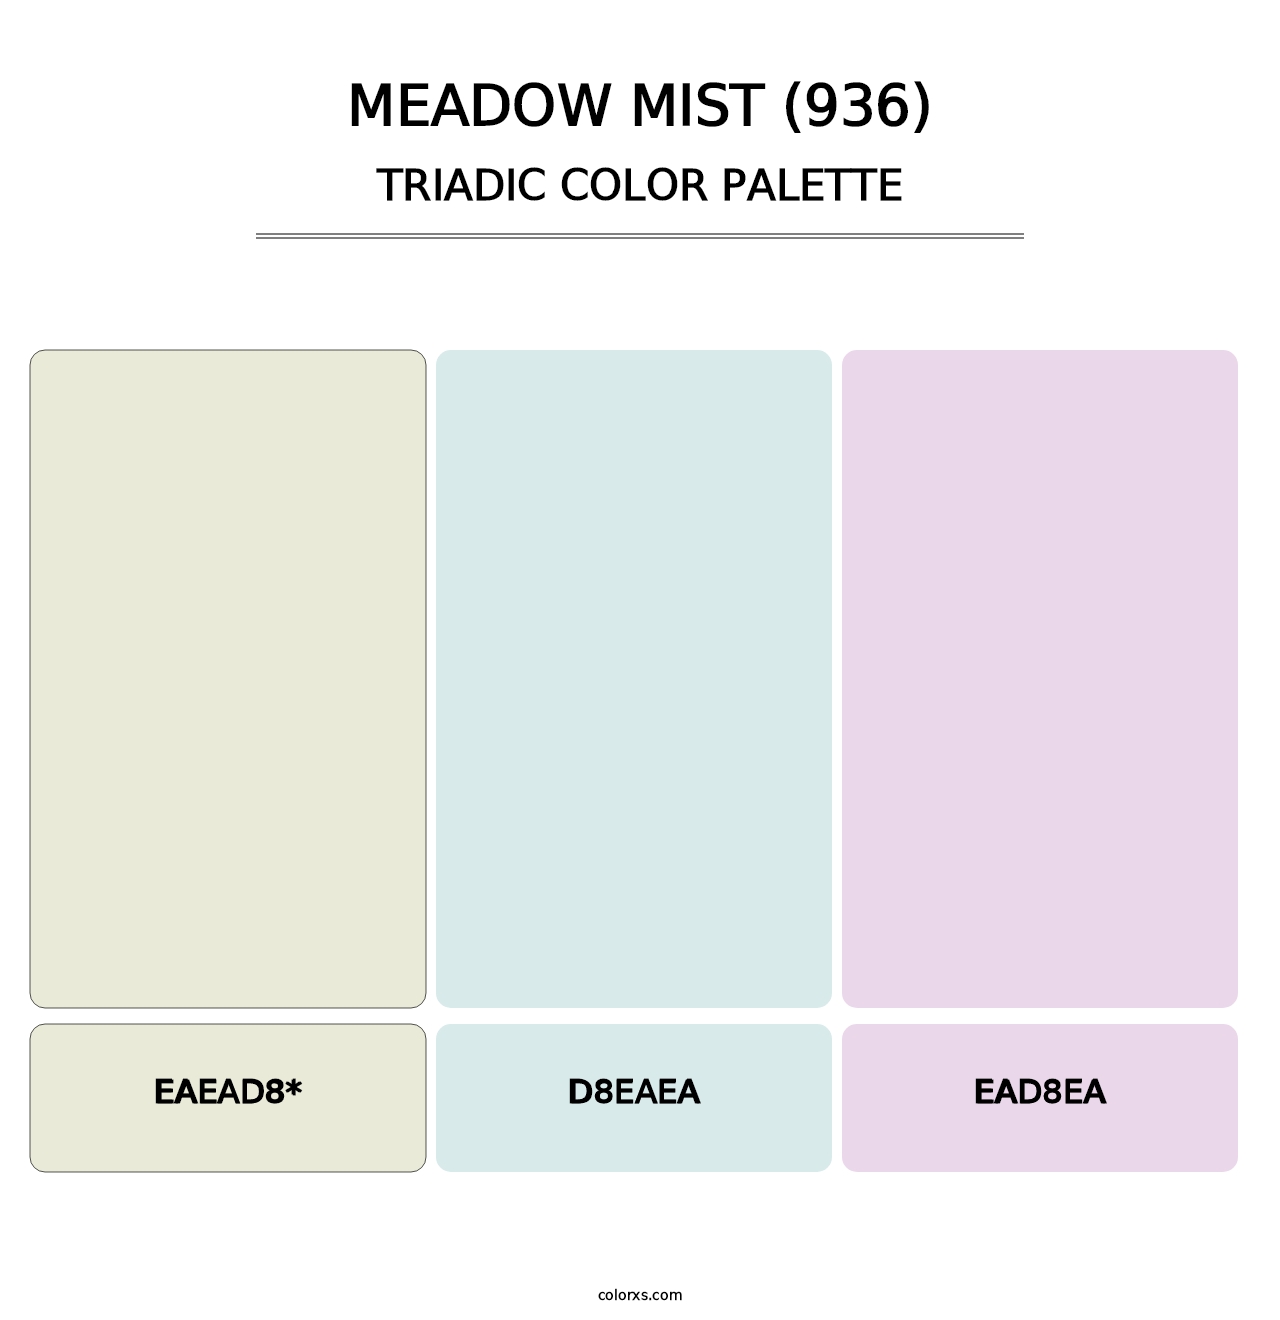 Meadow Mist (936) - Triadic Color Palette